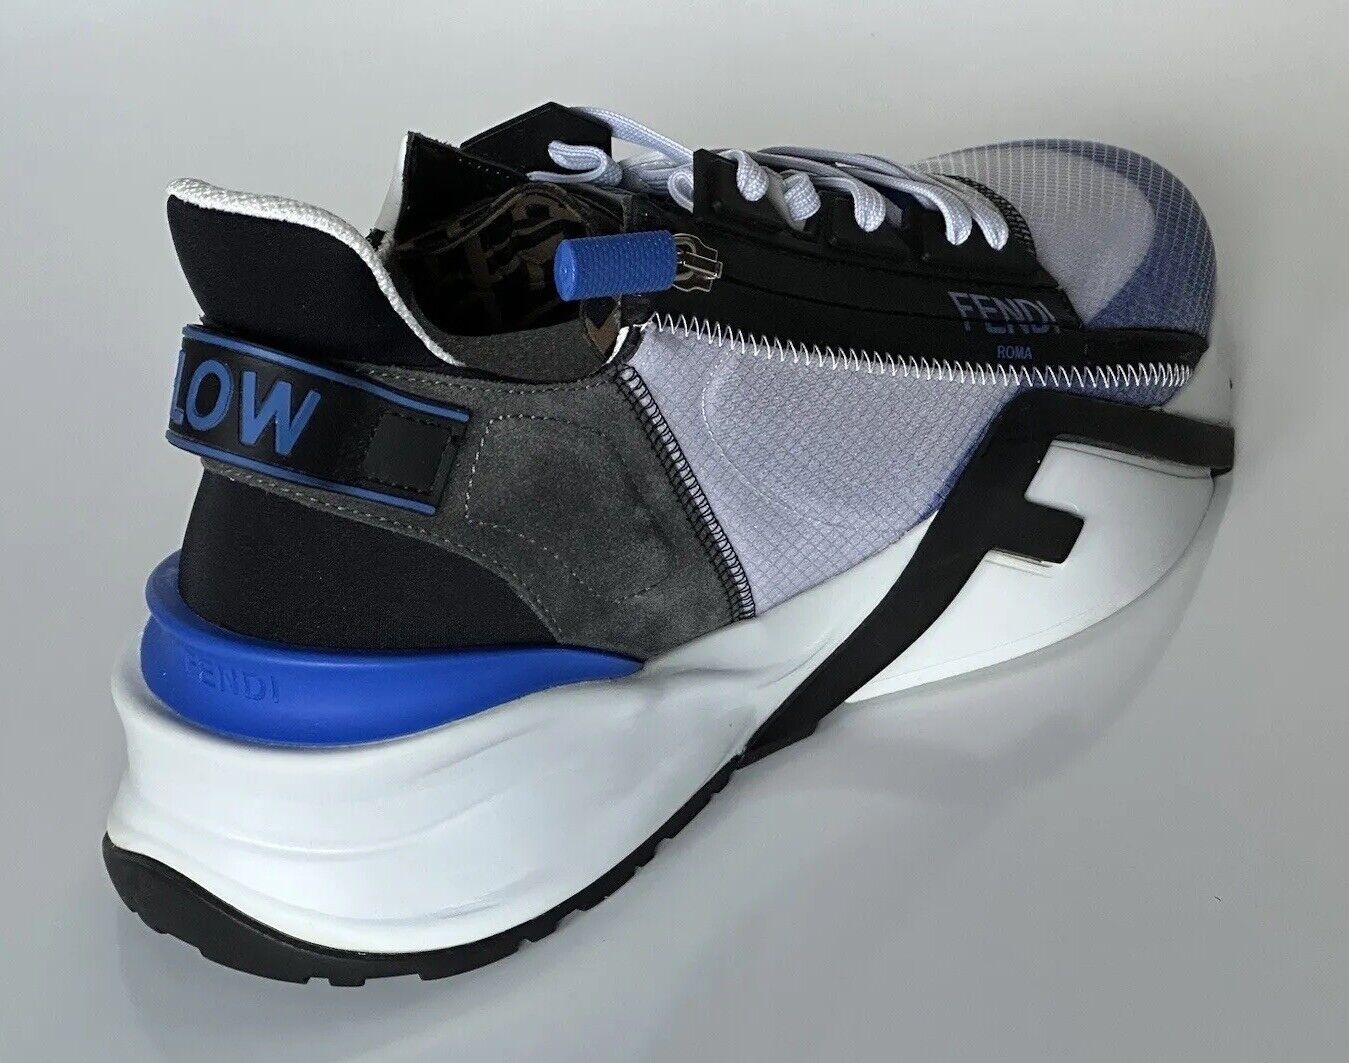 NIB Мужские кроссовки Fendi Flow из кожи/ткани, 870 долларов США, синие 13 США (46 евро) 7E1392 IT